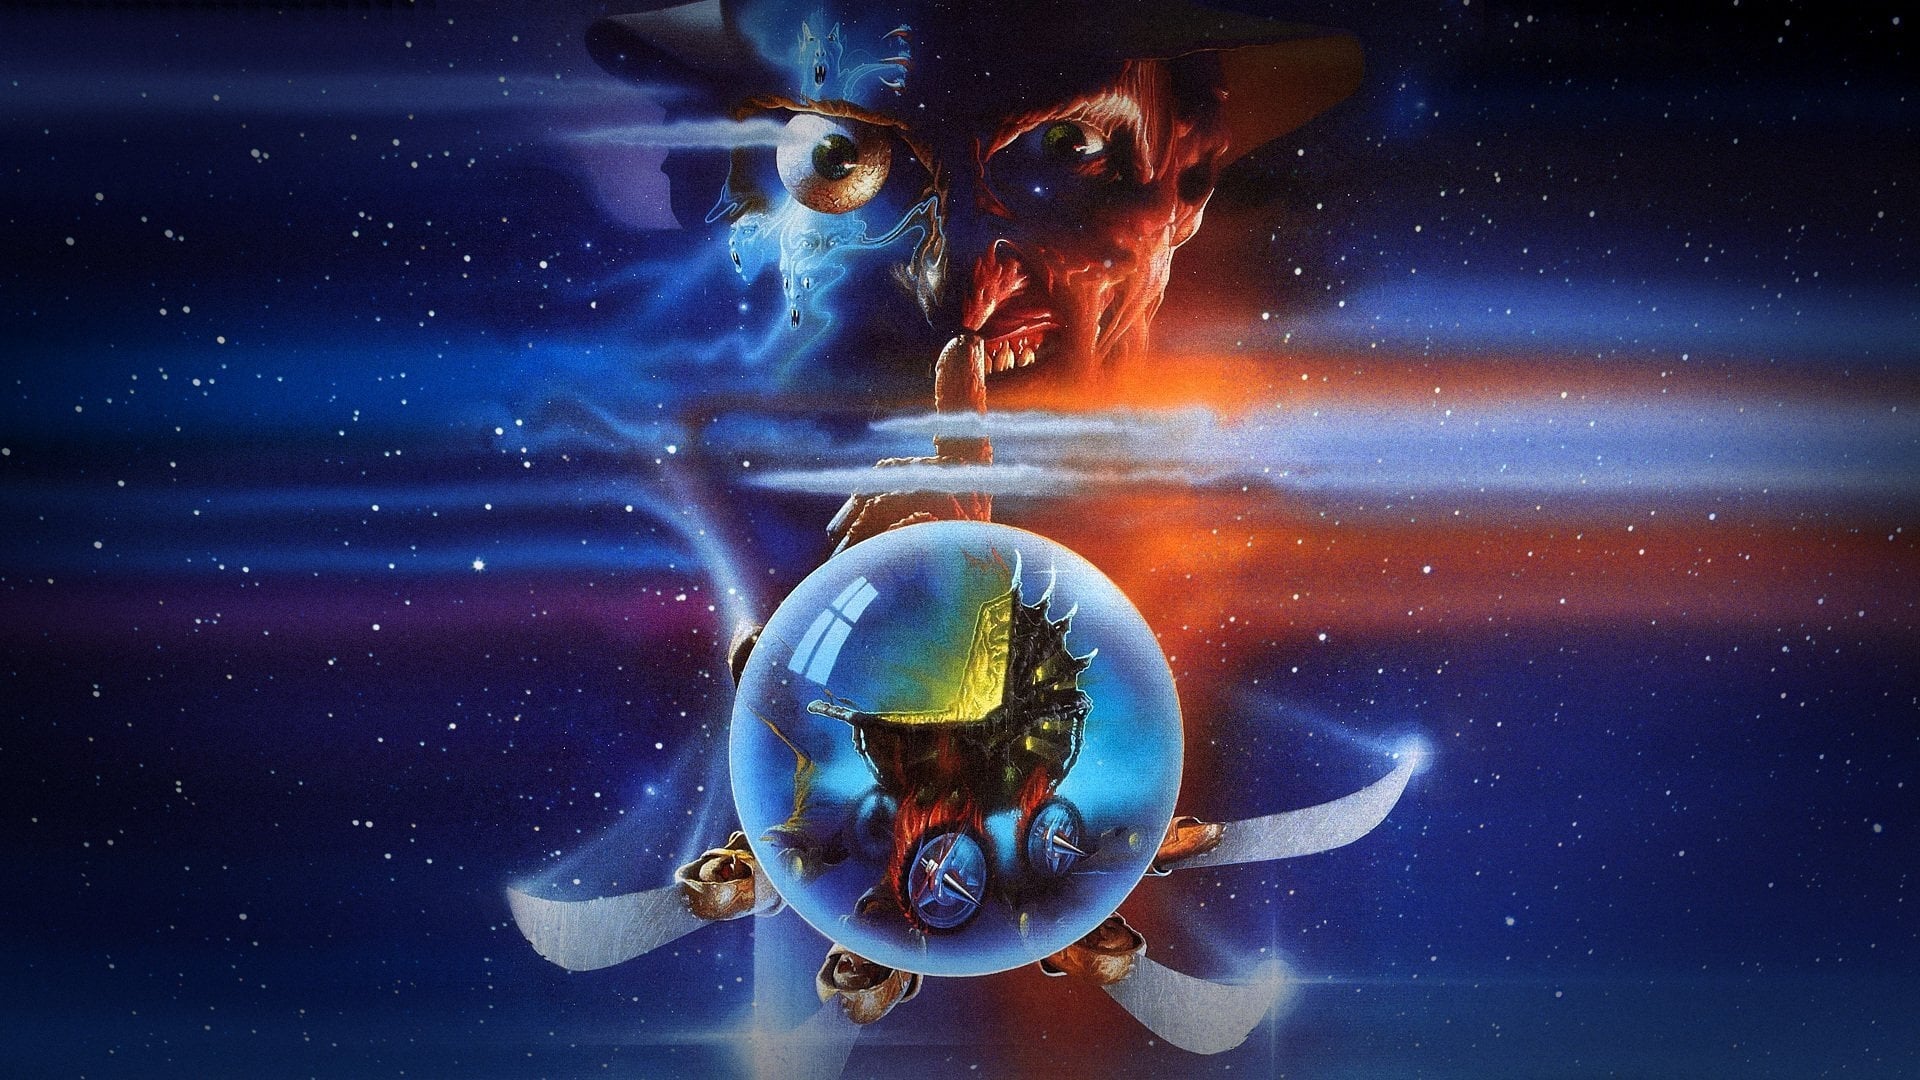 A Nightmare on Elm Street: The Dream Child 1989 123movies